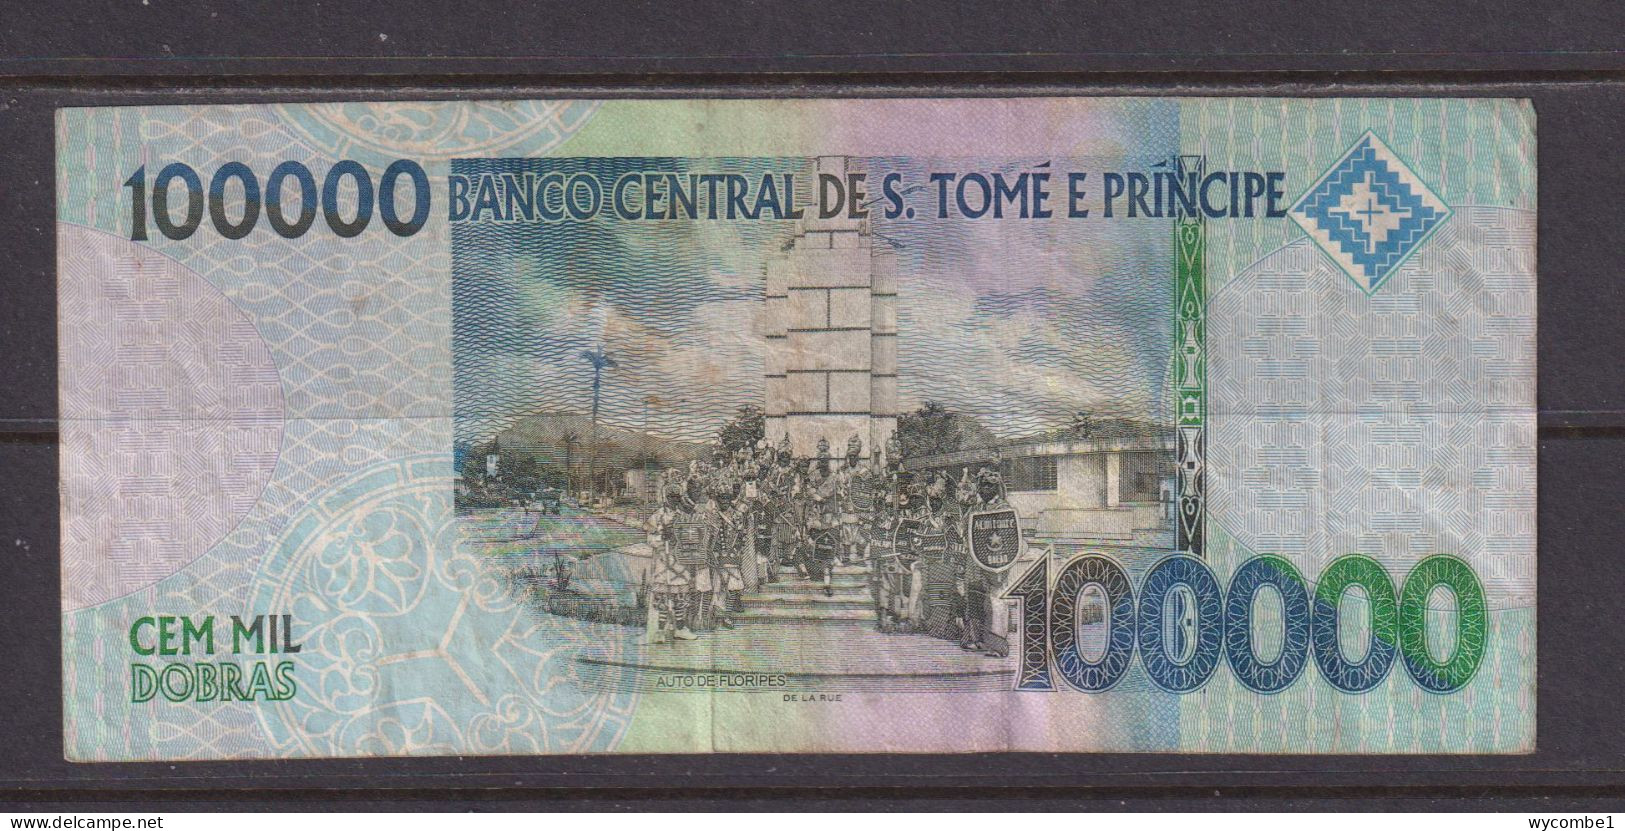 SAO TOME AND PRINCIPE - 2005 100000 Dobras Circulated Banknote As Scans - Sao Tome And Principe